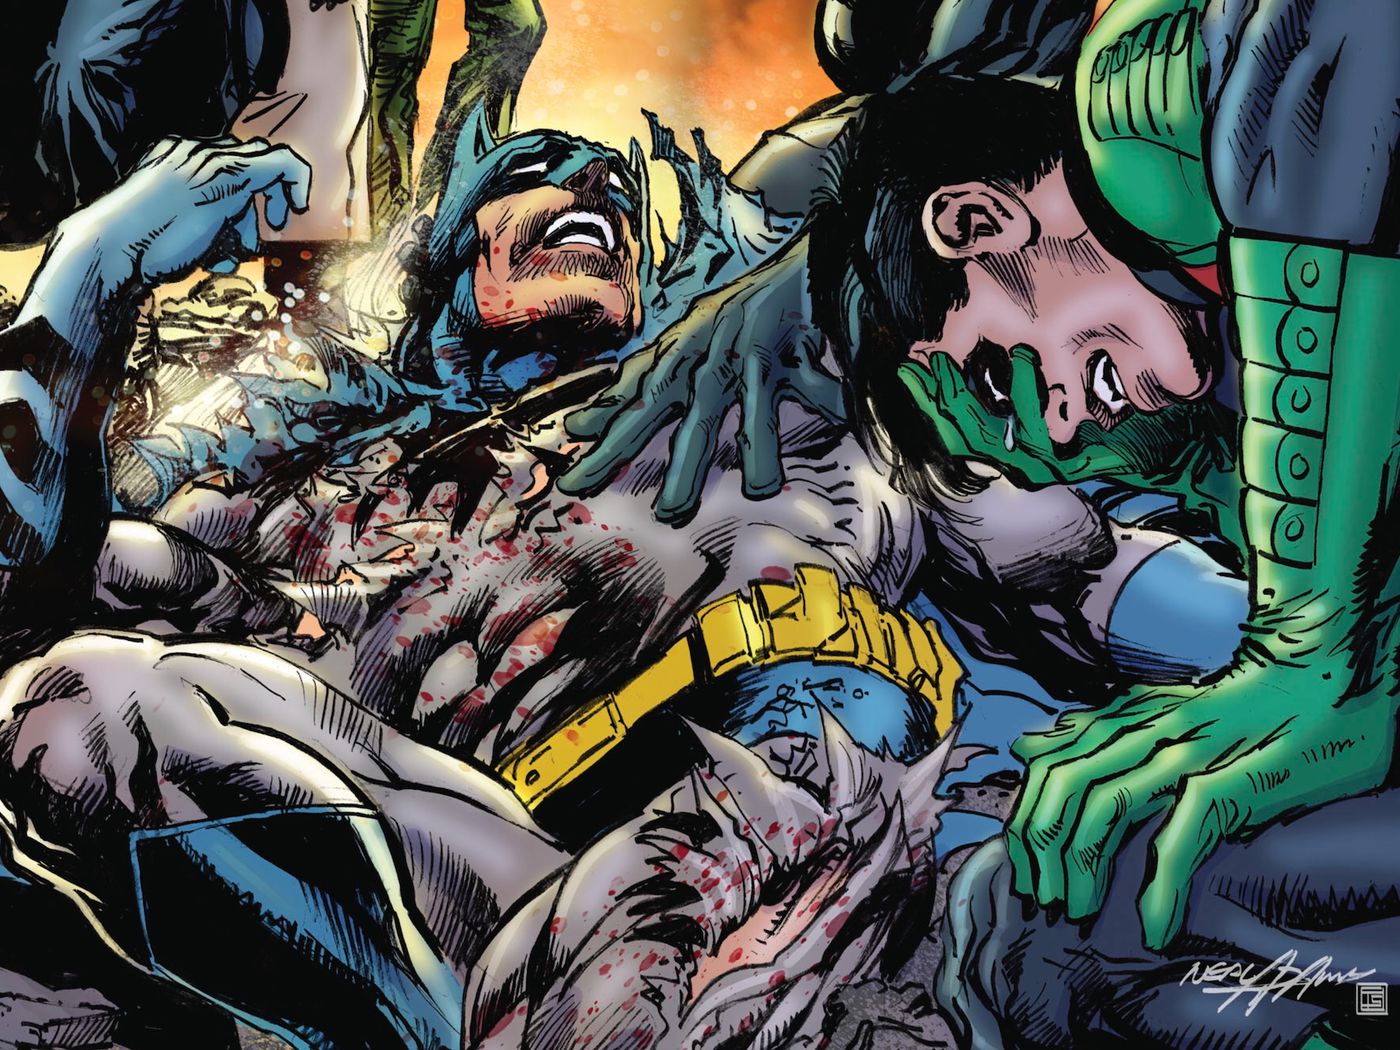 Batman vs Ras Al Ghul is in a bonkers comics genre all its own